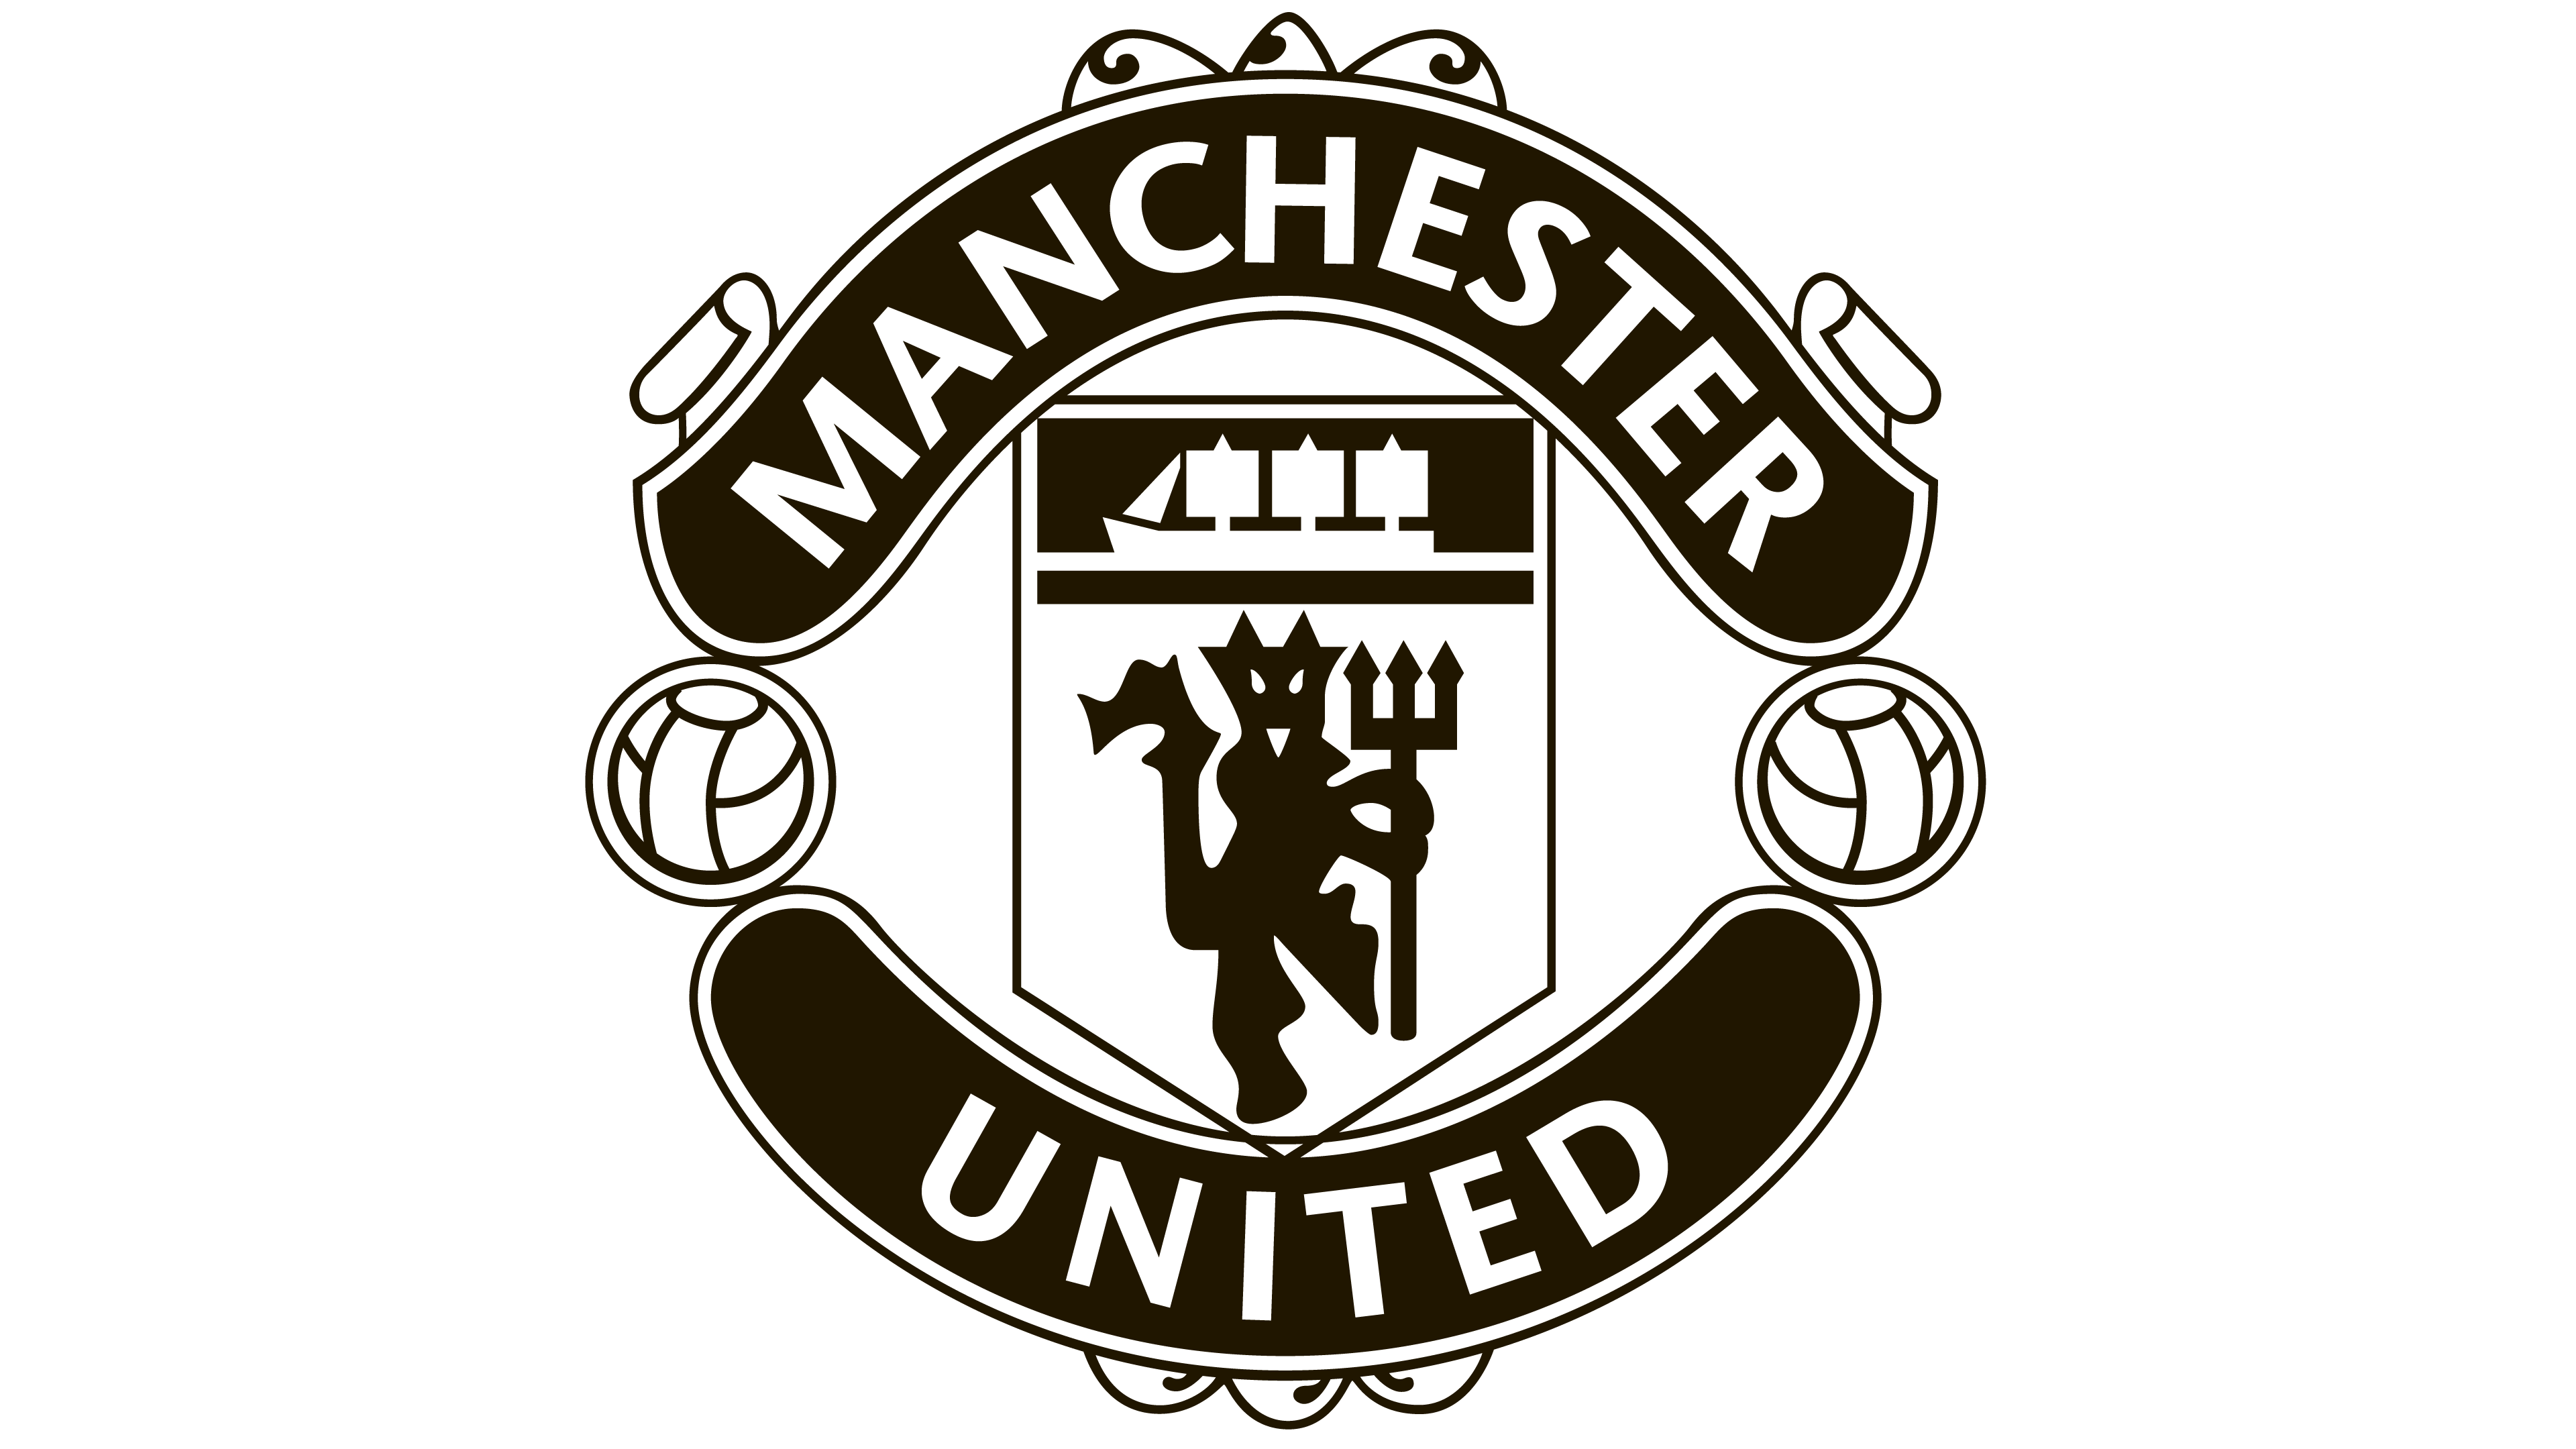 Manchester United Logo - Manchester United logo - Interesting History Team Name and emblem